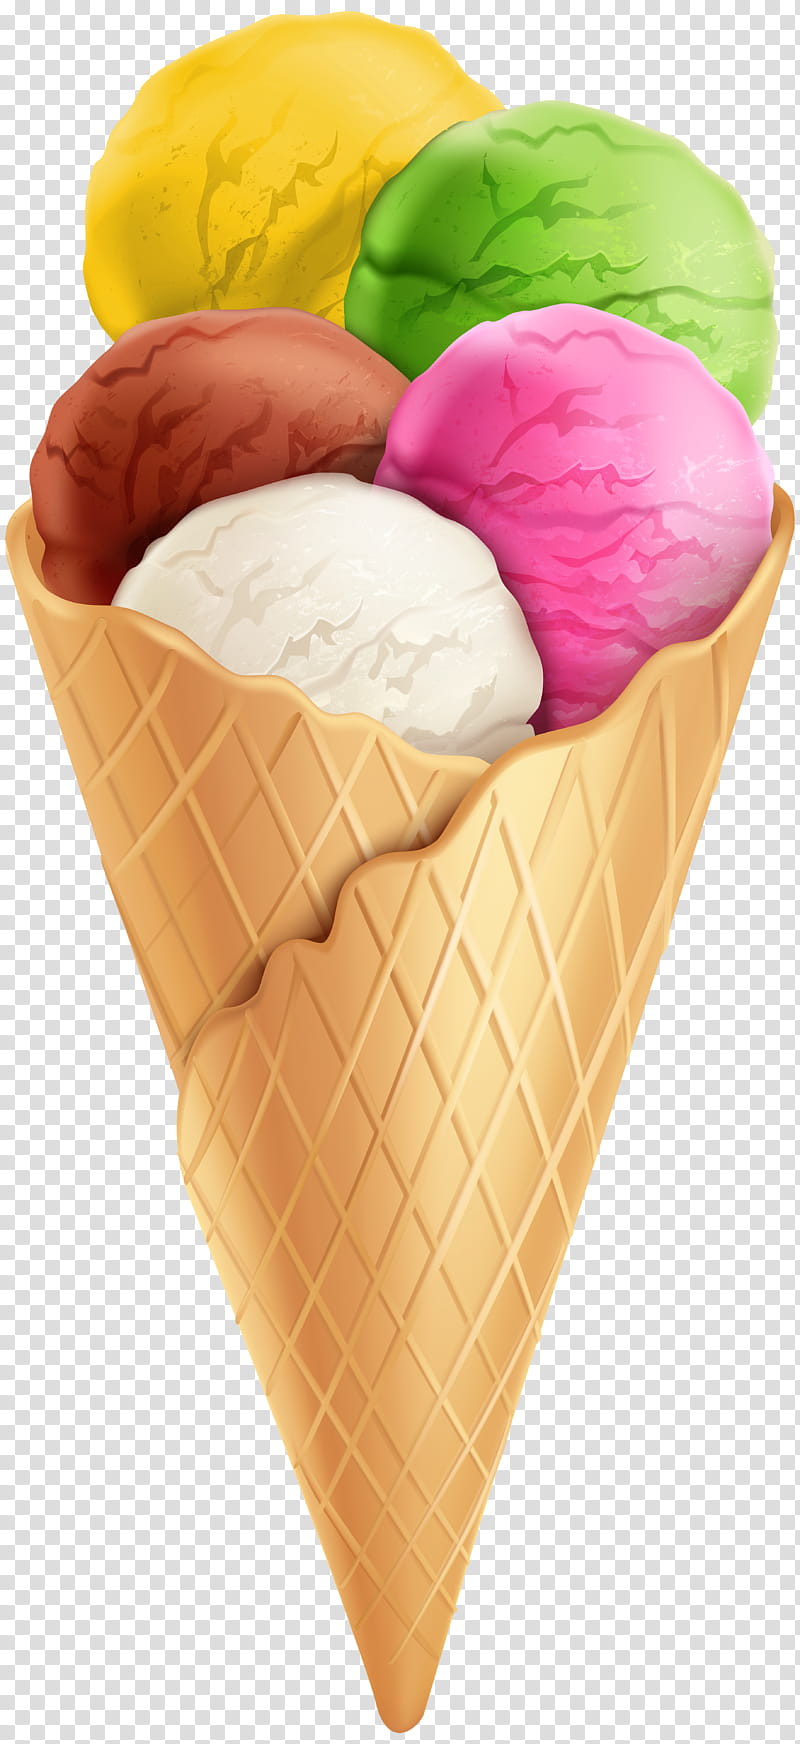 Ice Cream Cone, Ice Cream Cones, Neapolitan Ice Cream, Ice Pops, Strawberry Ice Cream, Chocolate Ice Cream, Confectionery, Ice Cream Sandwich transparent background PNG clipart